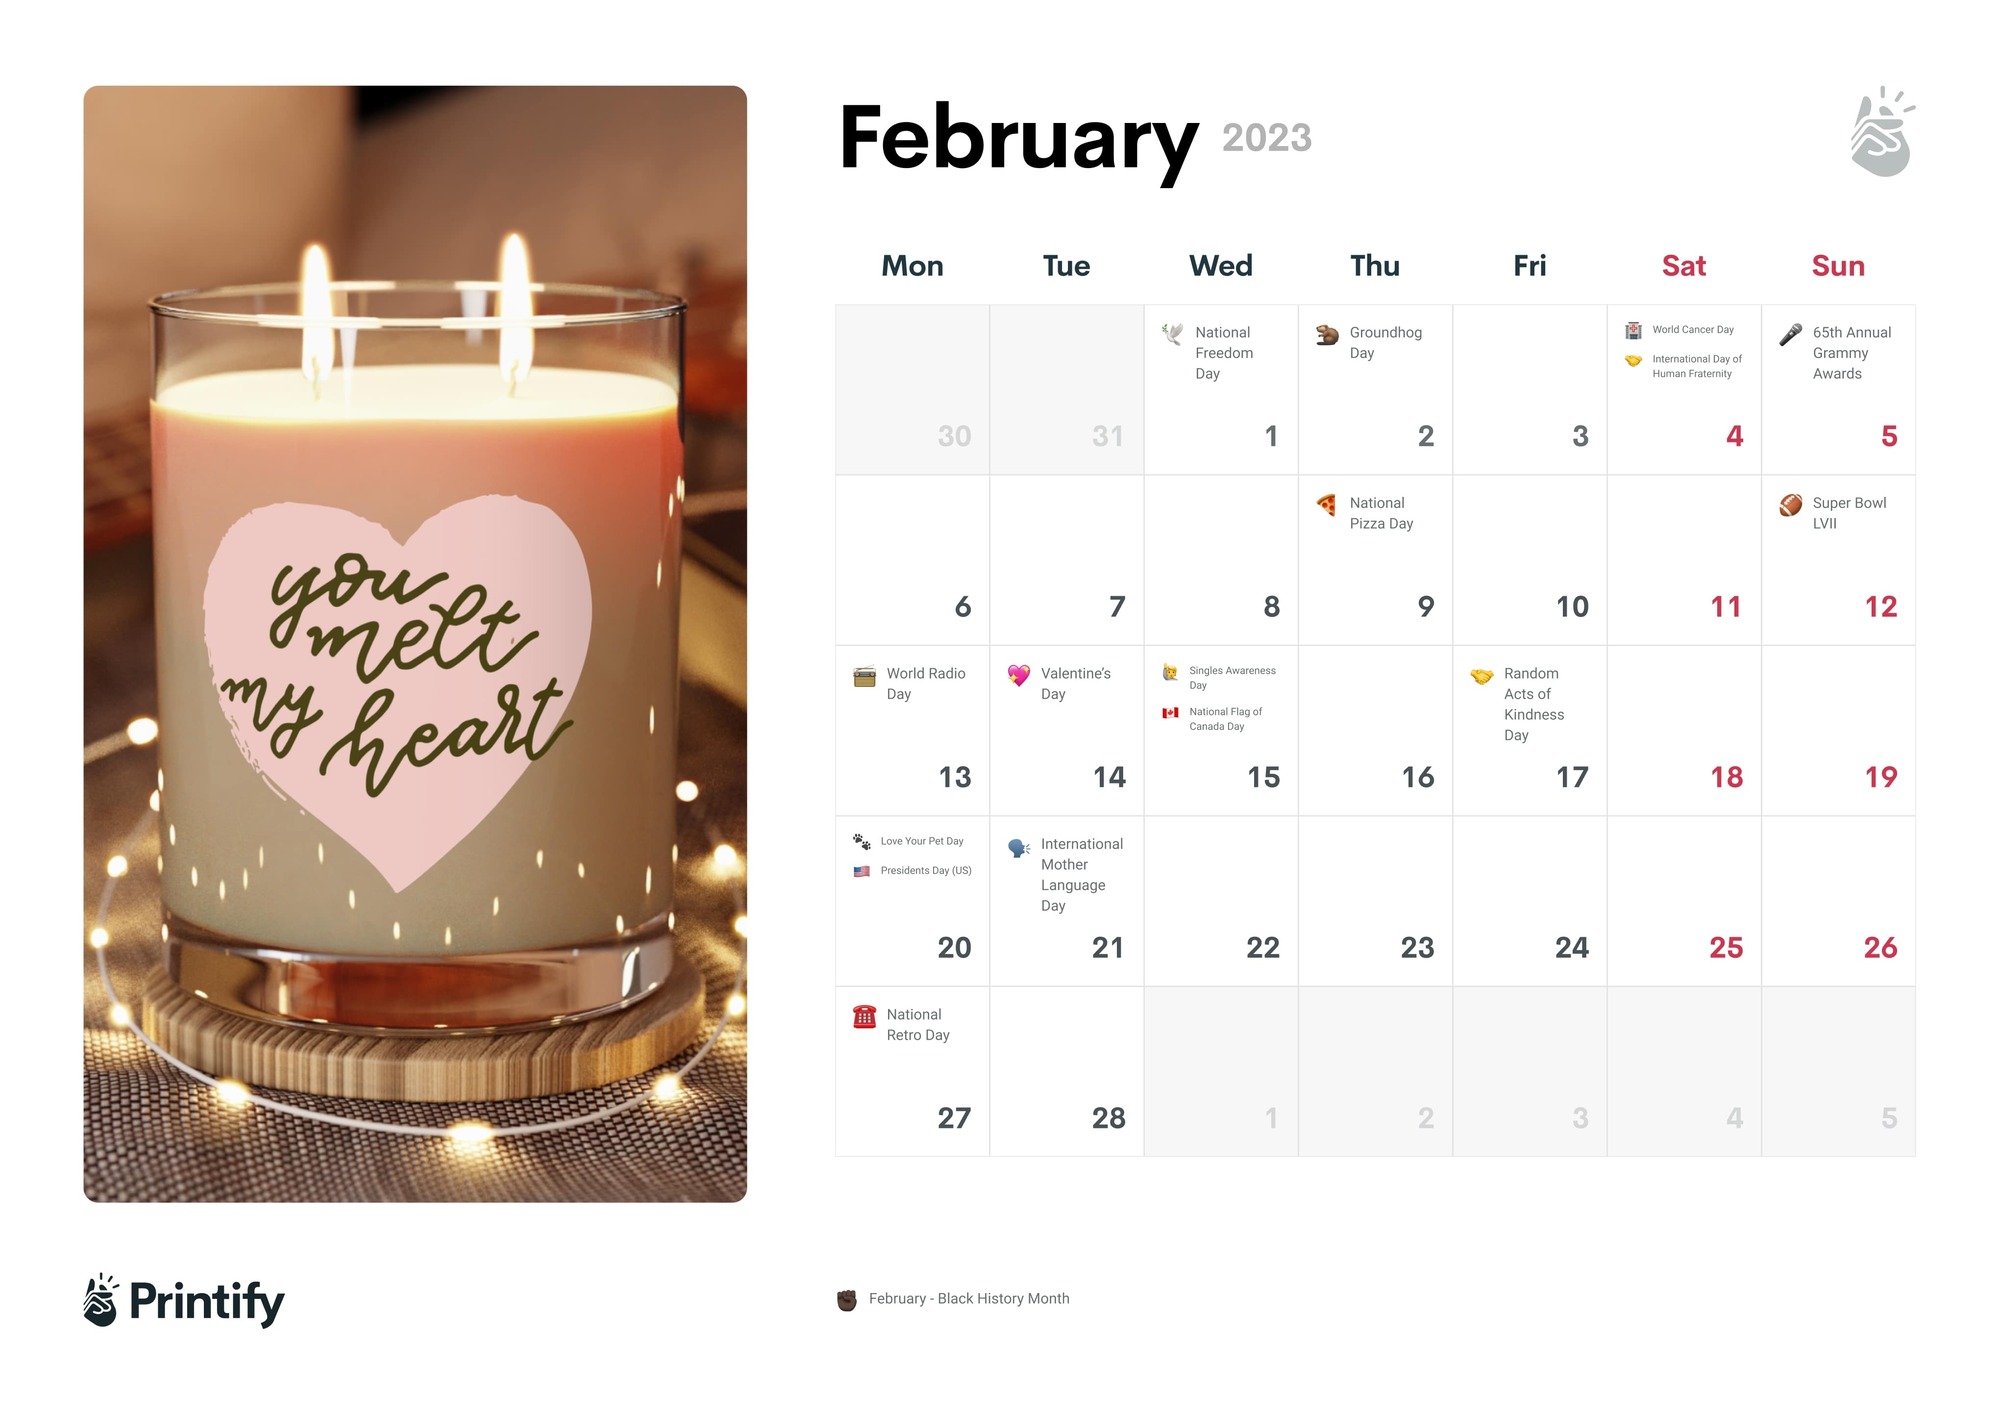 Marketing Calendar 2022 - February